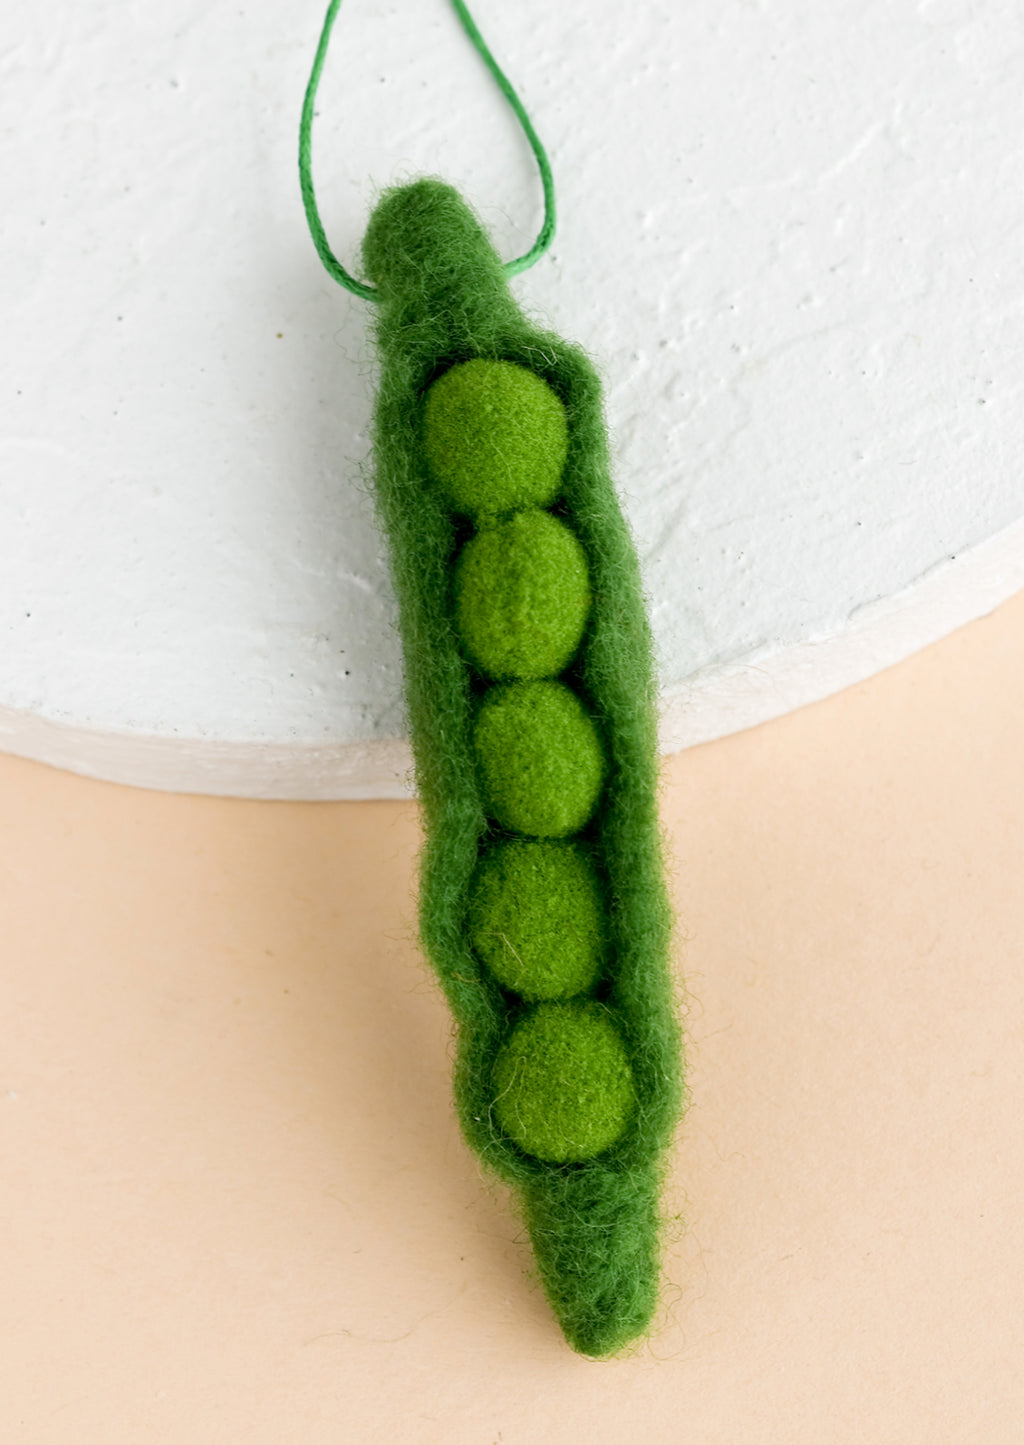 Pea: A felted ornament of a pea.